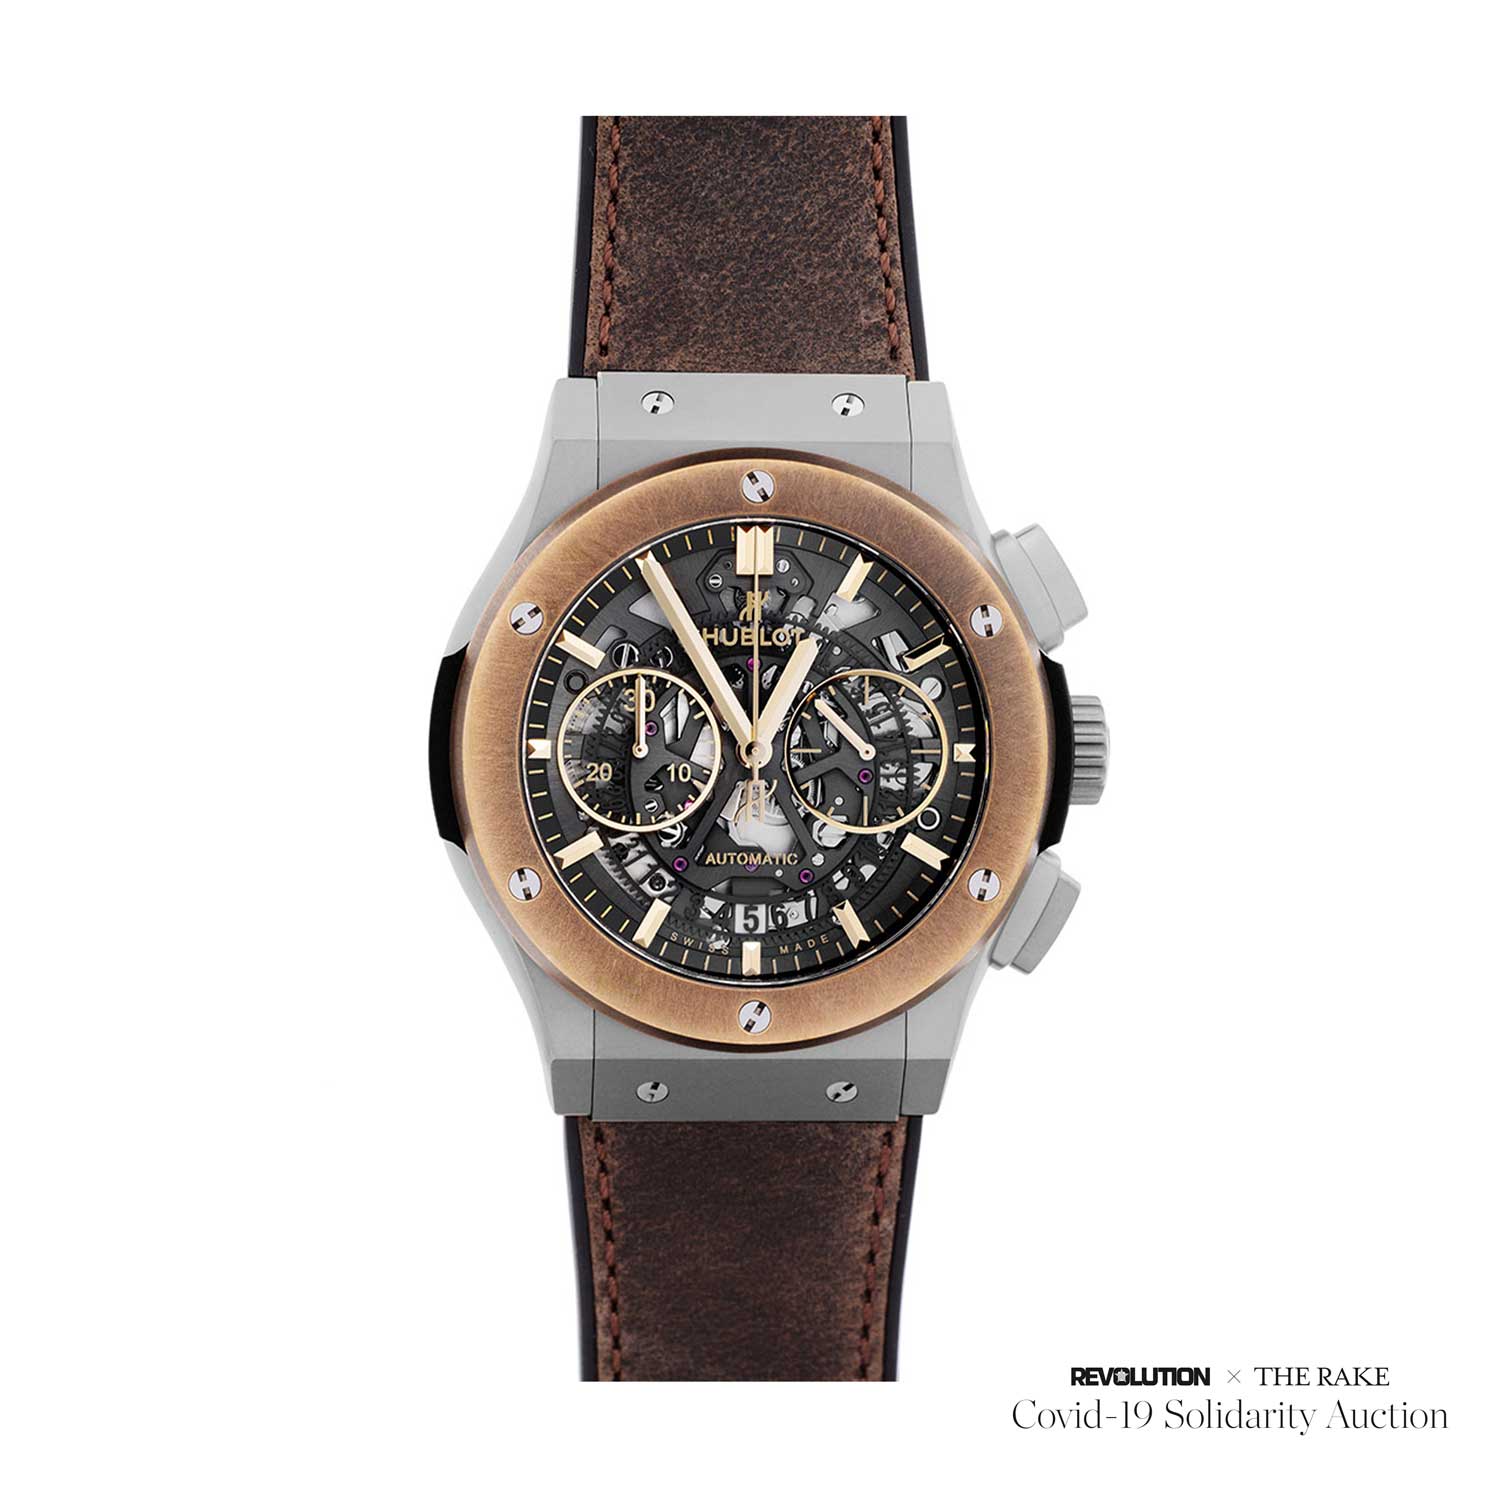 Factory Prototype Hublot Aerofusion Chronograph “Molon Labe” titanium and bronze limited edition for The Rake